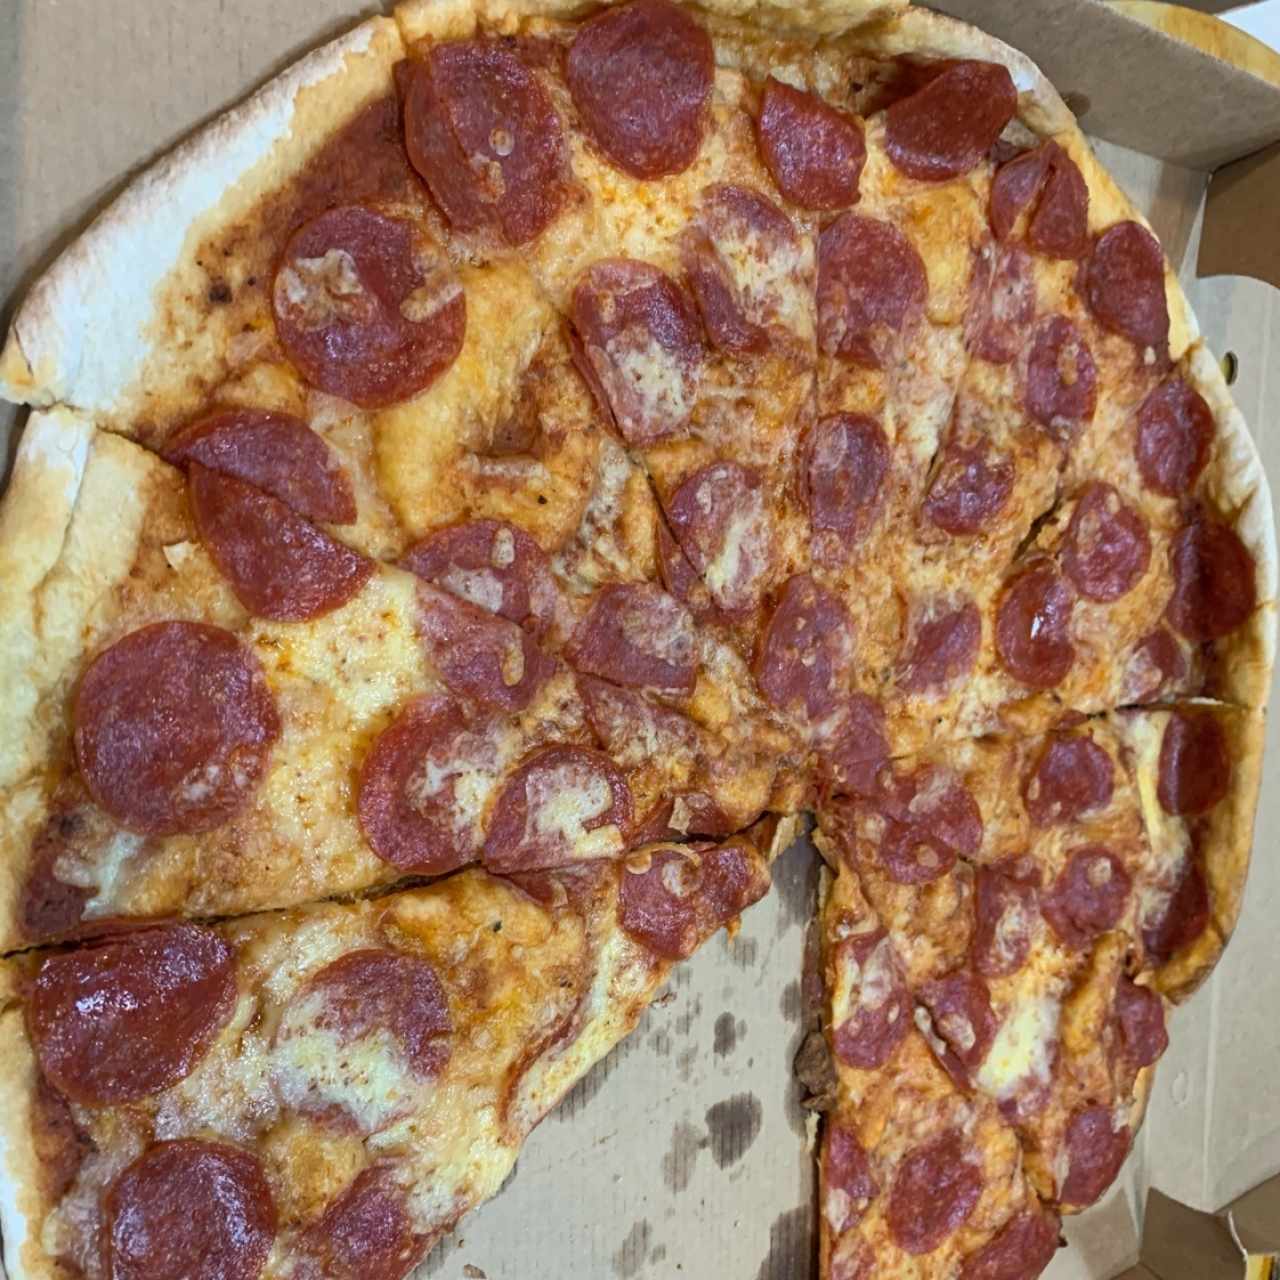 Pizza de Pepperoni, tamaño familiar